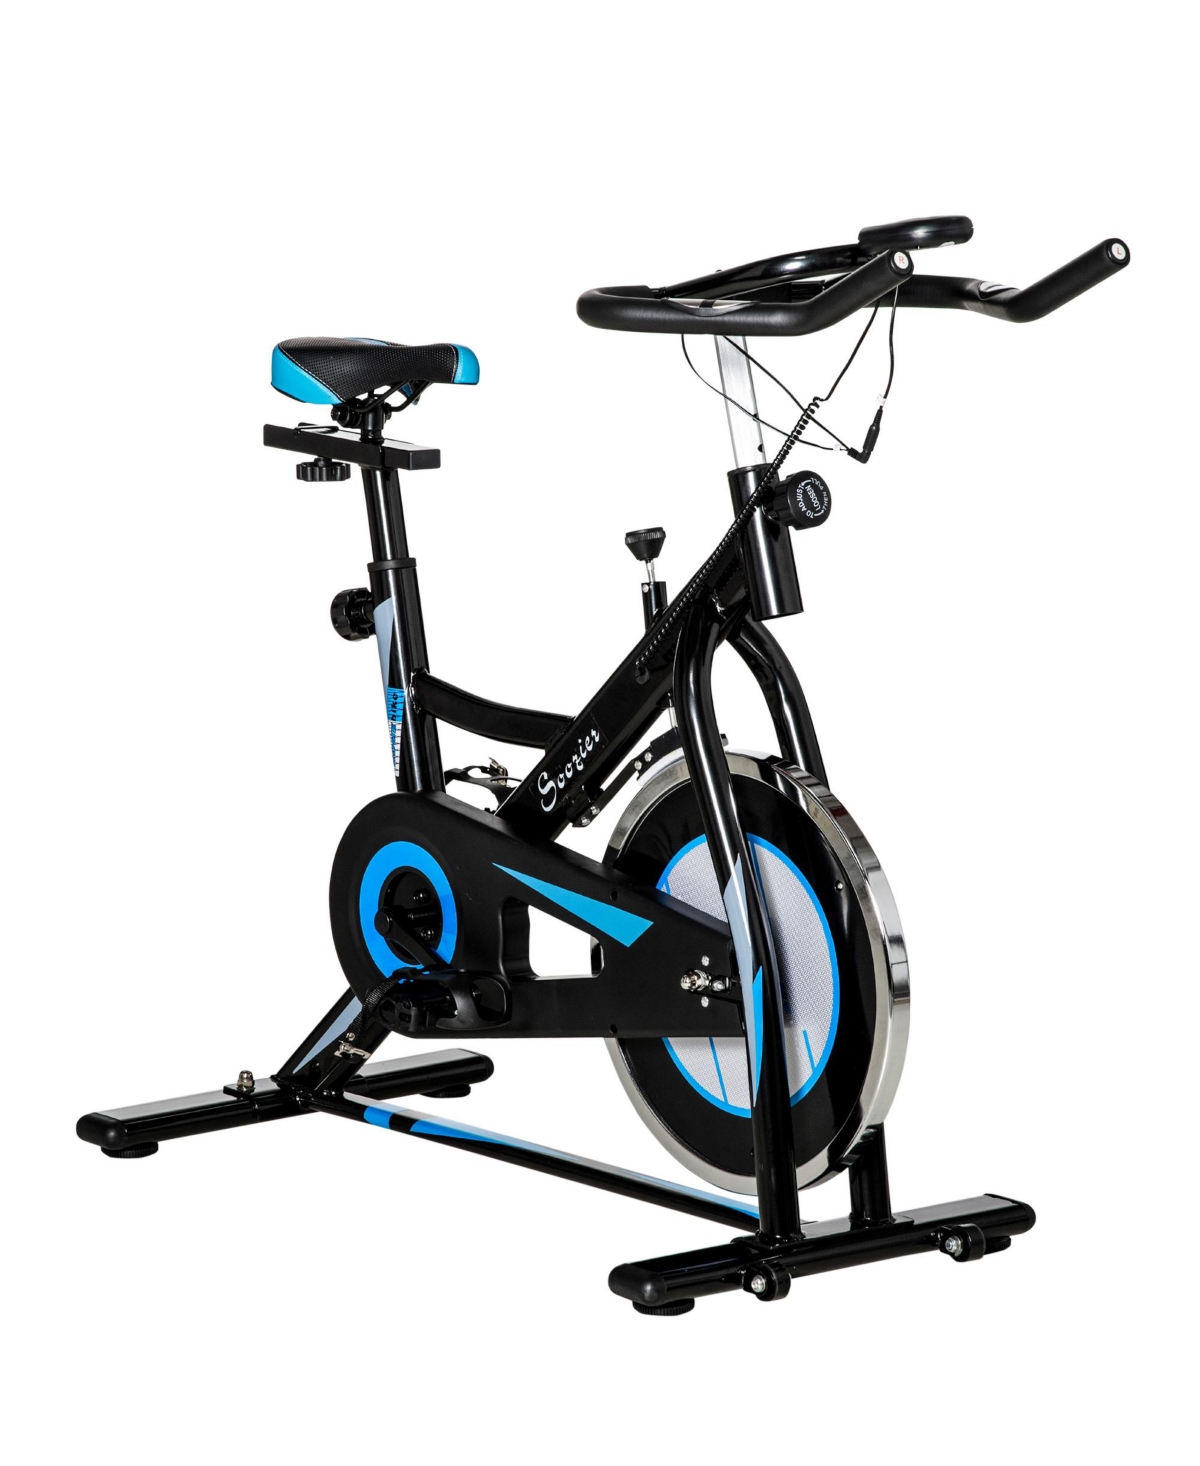 Stationary Indoor Cycling Exercise Bike, Adjustable Comfortable Seat w/ Cushion, Grip Handlebar, Lcd, 22 lbs. Weight Limit, Flywheel Cardio Wo